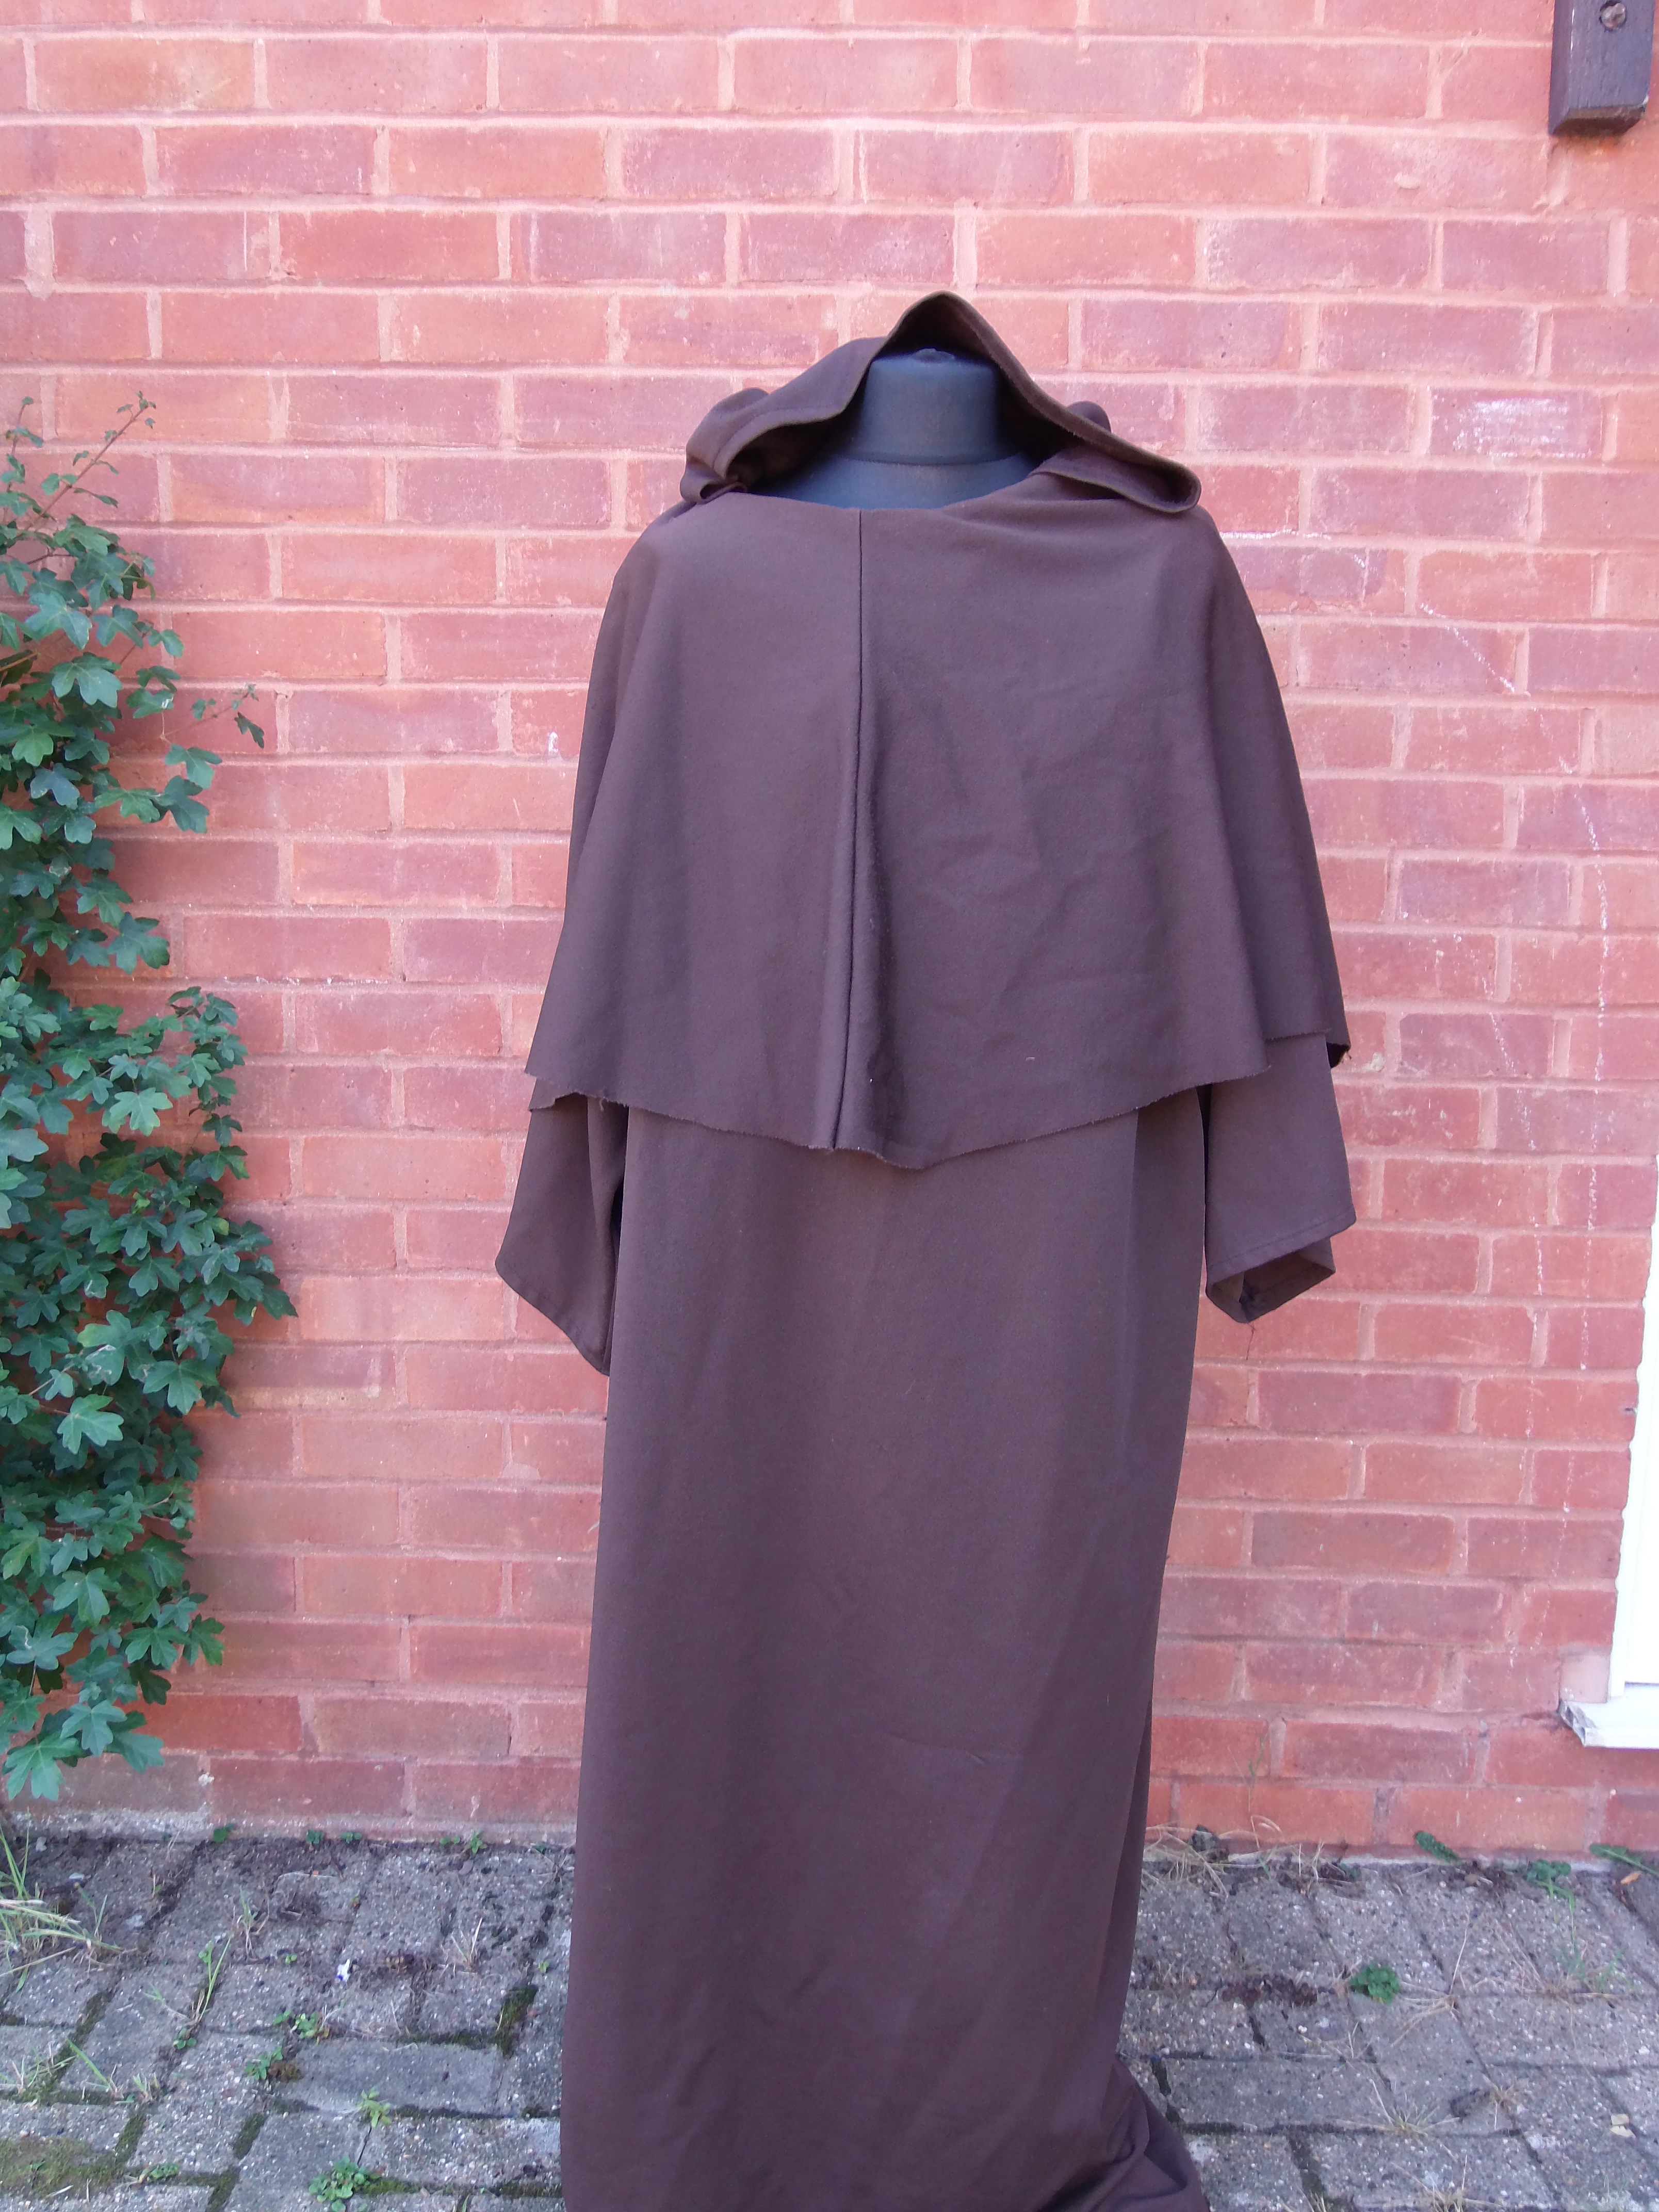 MKTOC Monk robe